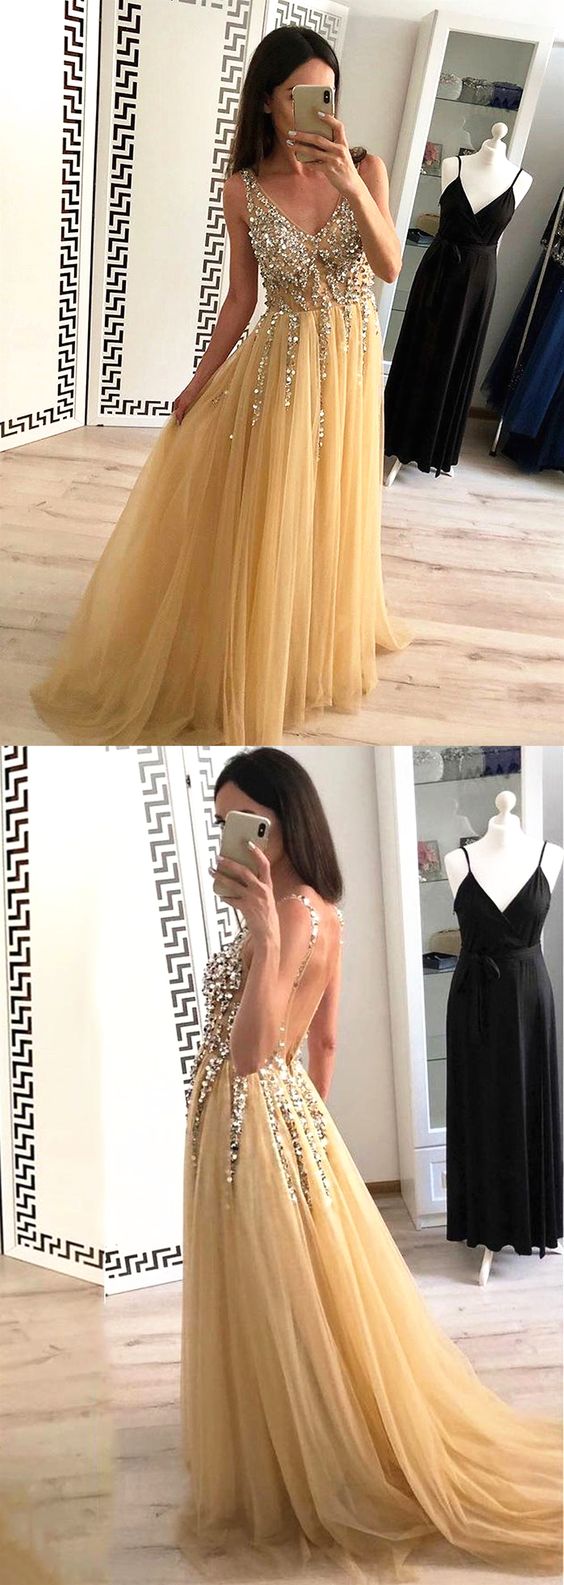 Gold Color Prom Dress Backless, Dresses For Graduation Party, Evening Dress, Formal Dress